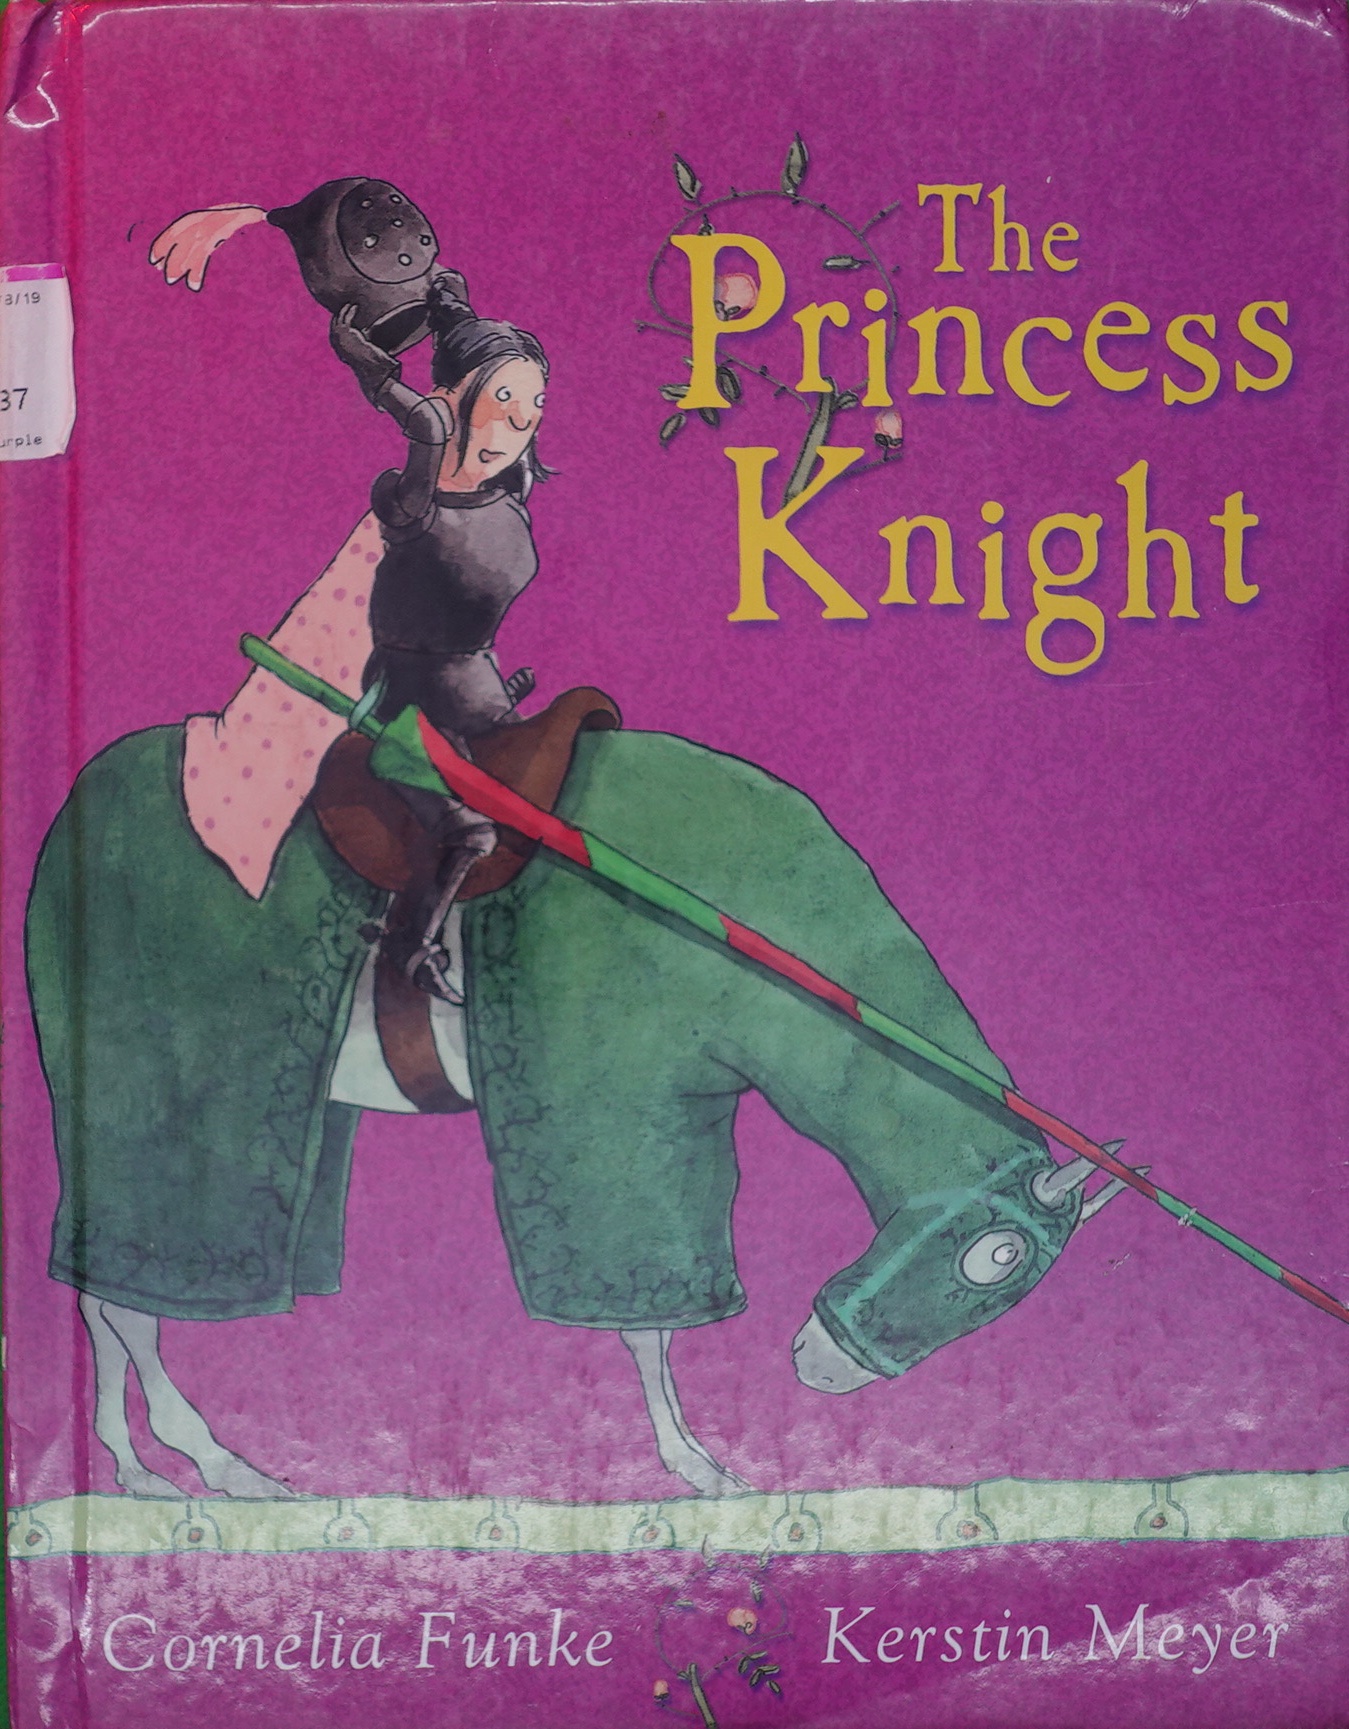 The Princess Knight by Cornelia Funke